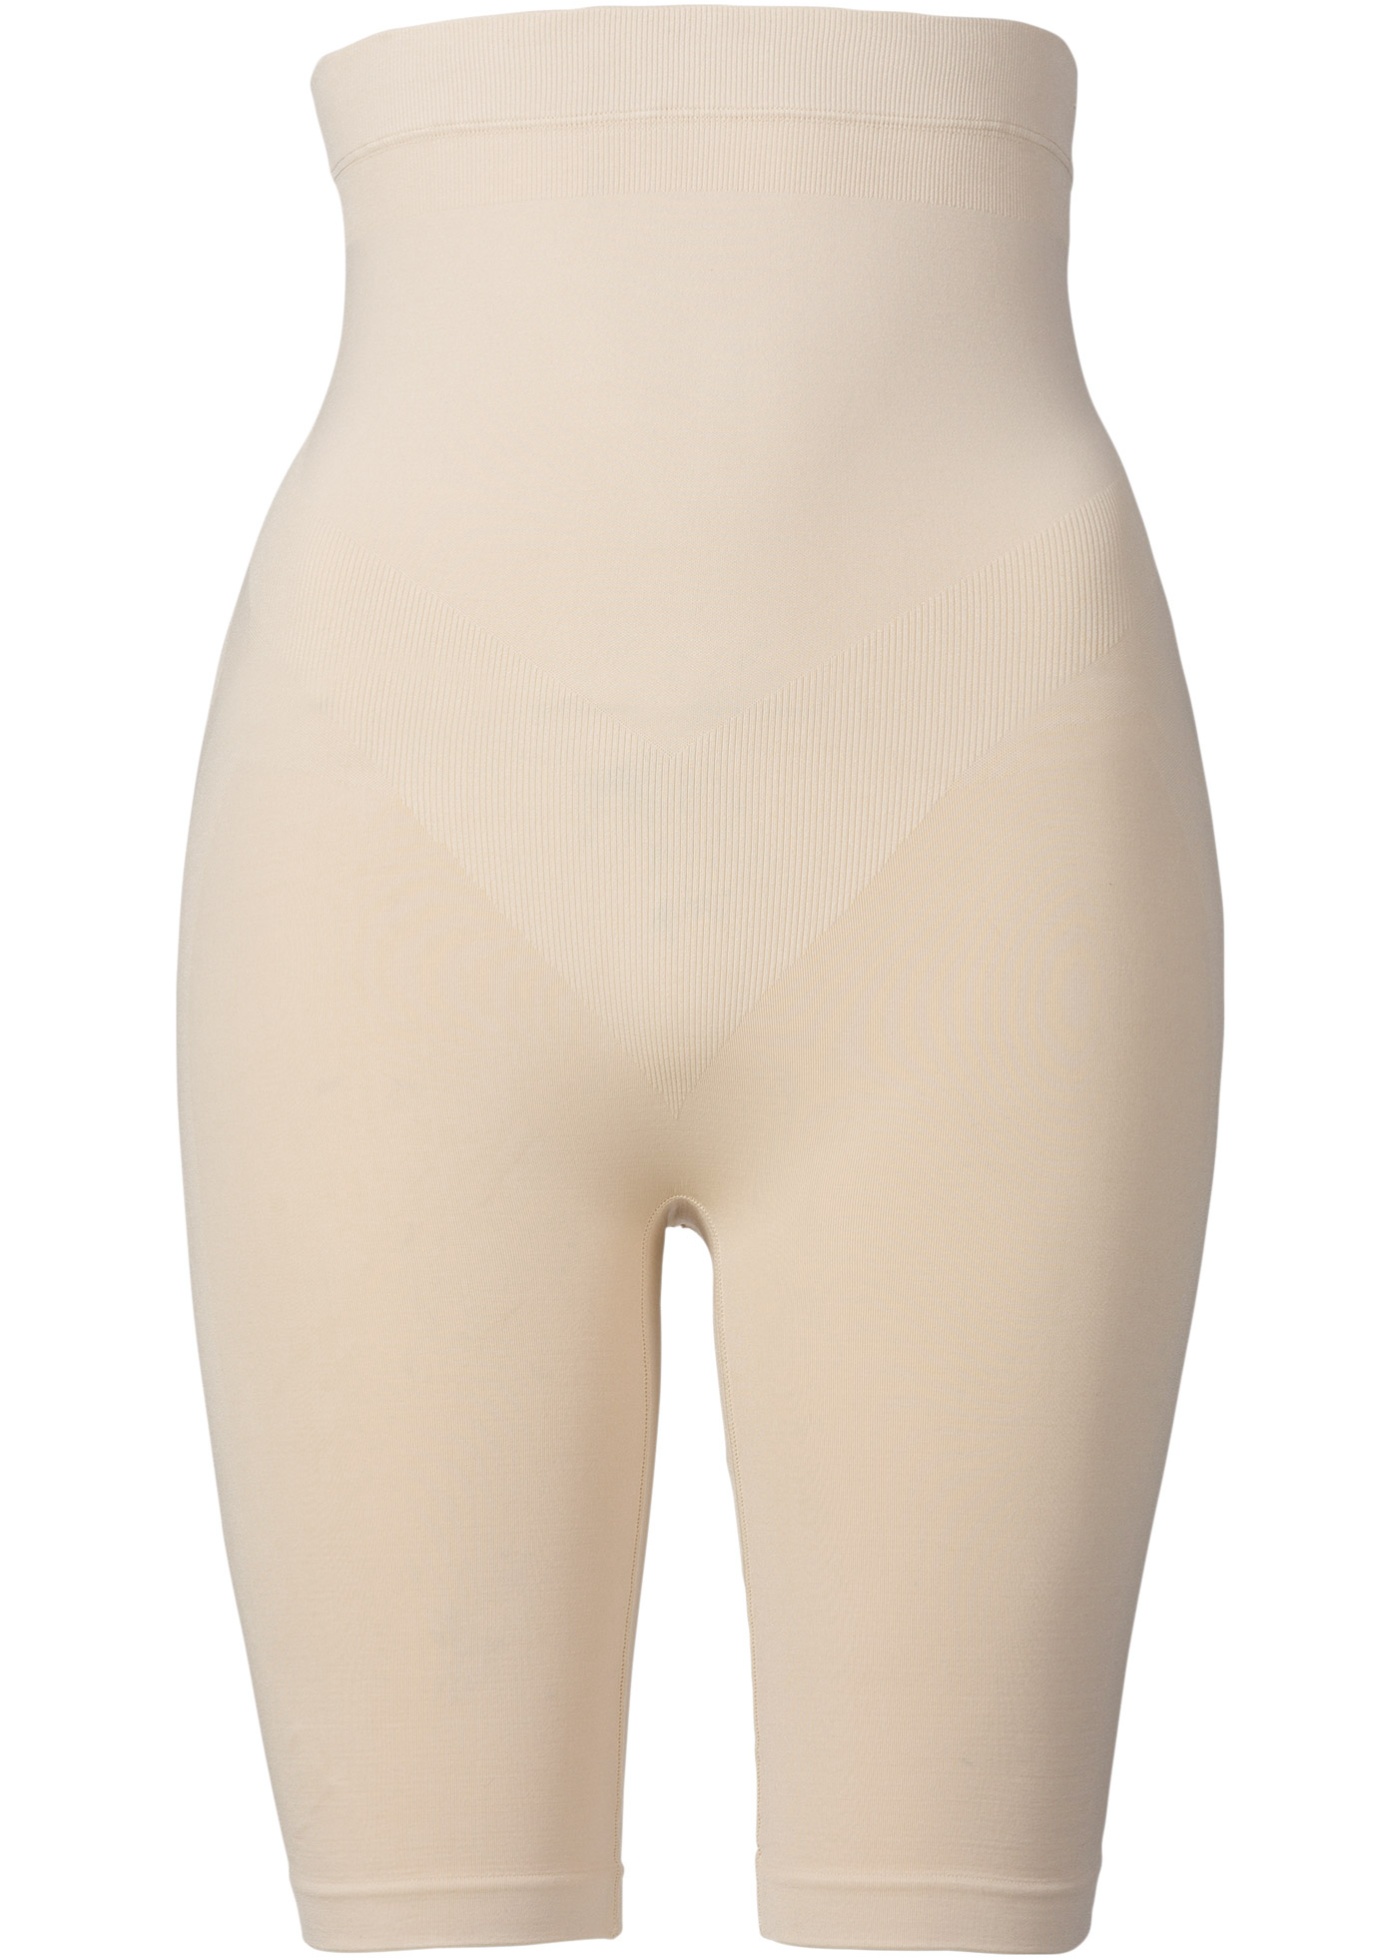 Pantaloni contenitivi senza cuciture (Grigio) - bpc bonprix collection - Nice Size